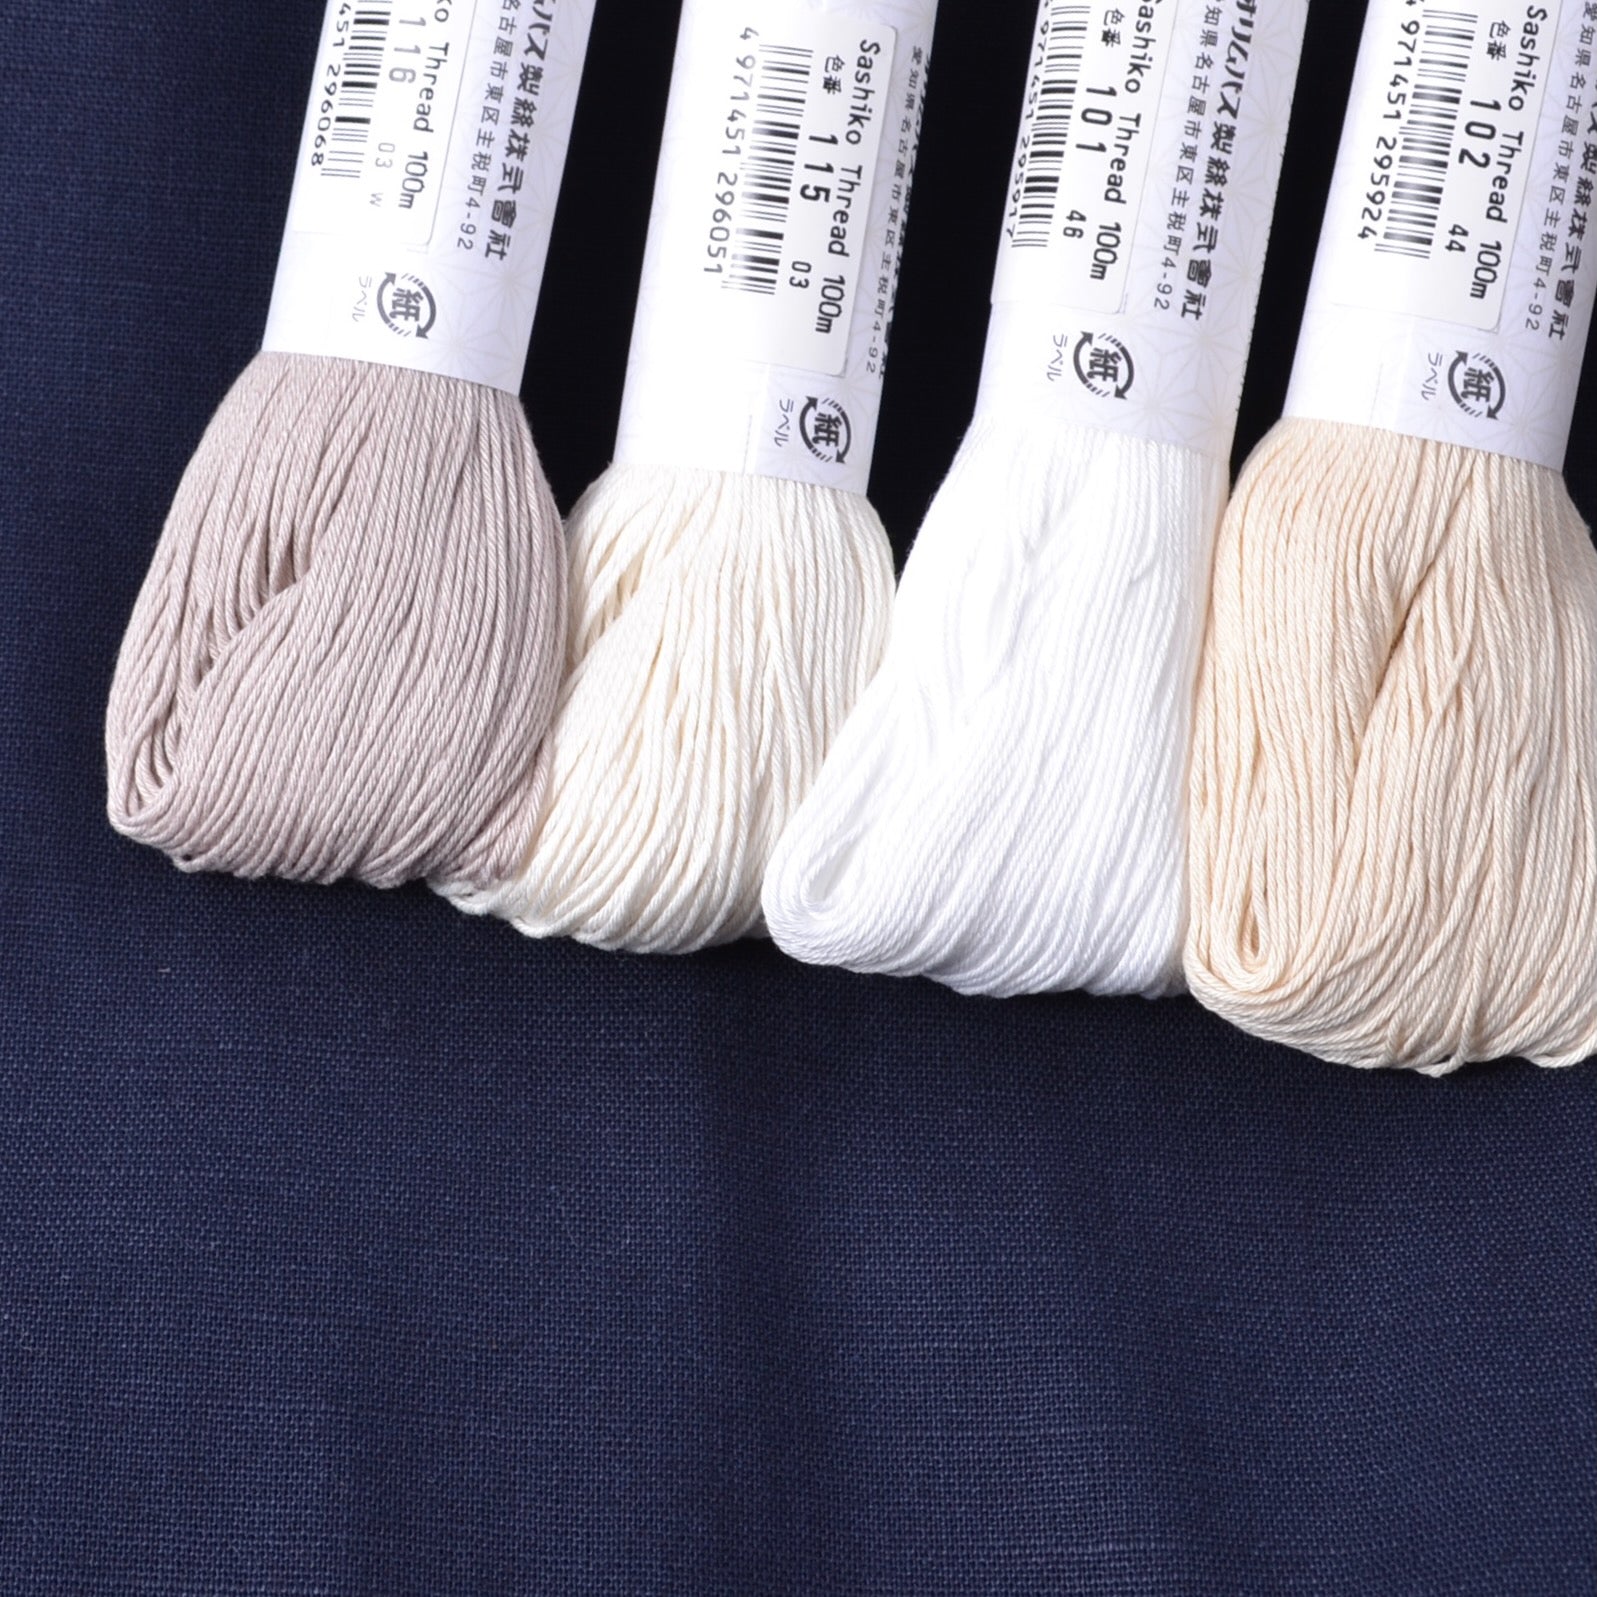 4 white sashiko threads shown on dark blue fabric